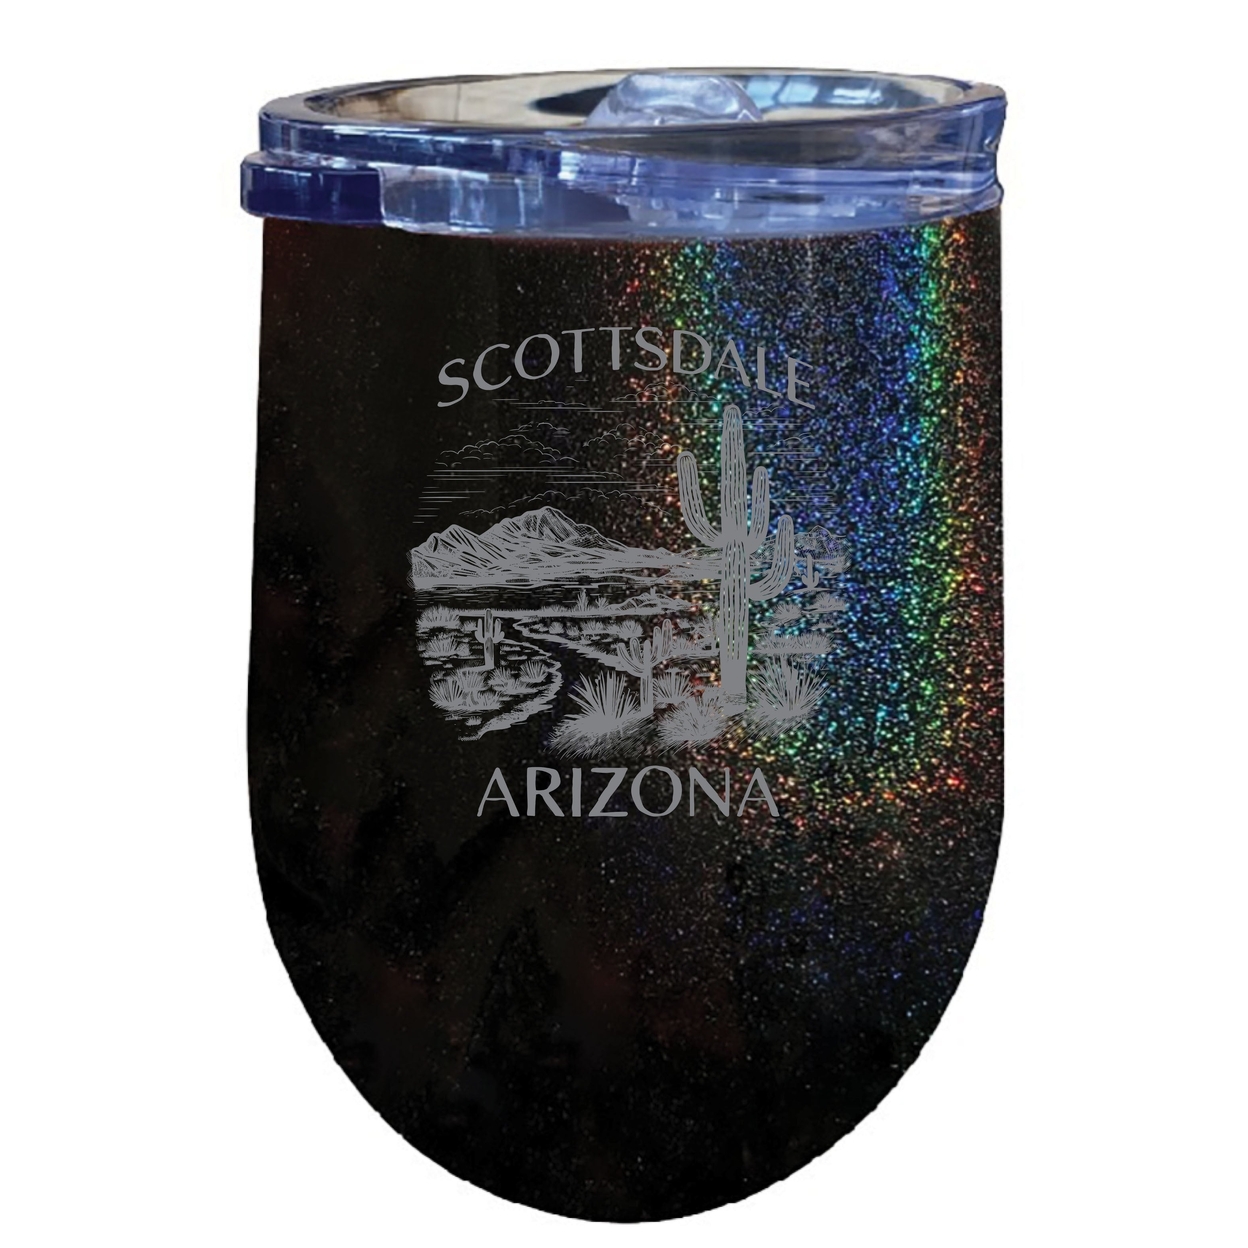 Scottsdale Arizona Souvenir 12 Oz Engraved Insulated Wine Stainless Steel Tumbler - Rainbow Glitter Gray,,Single Unit